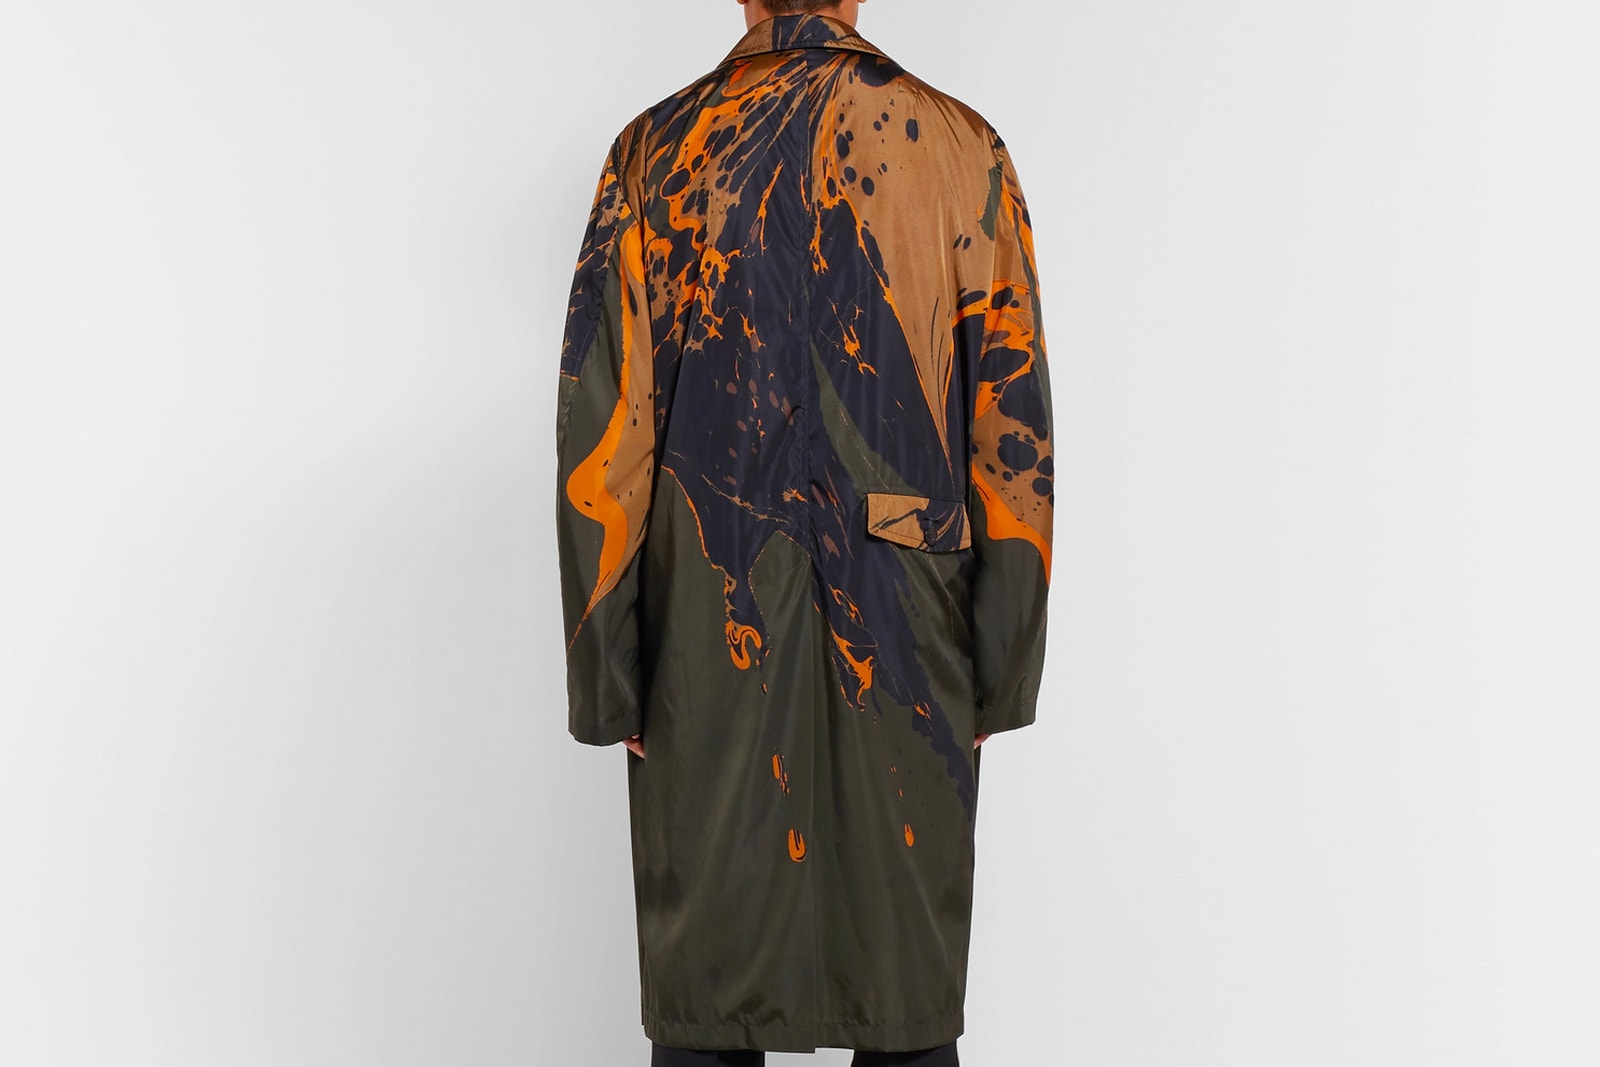 Dries Van Noten Fall Winter 2018 Ebru Shell Coat mr porter exclusive release info paris fashion week trench coat